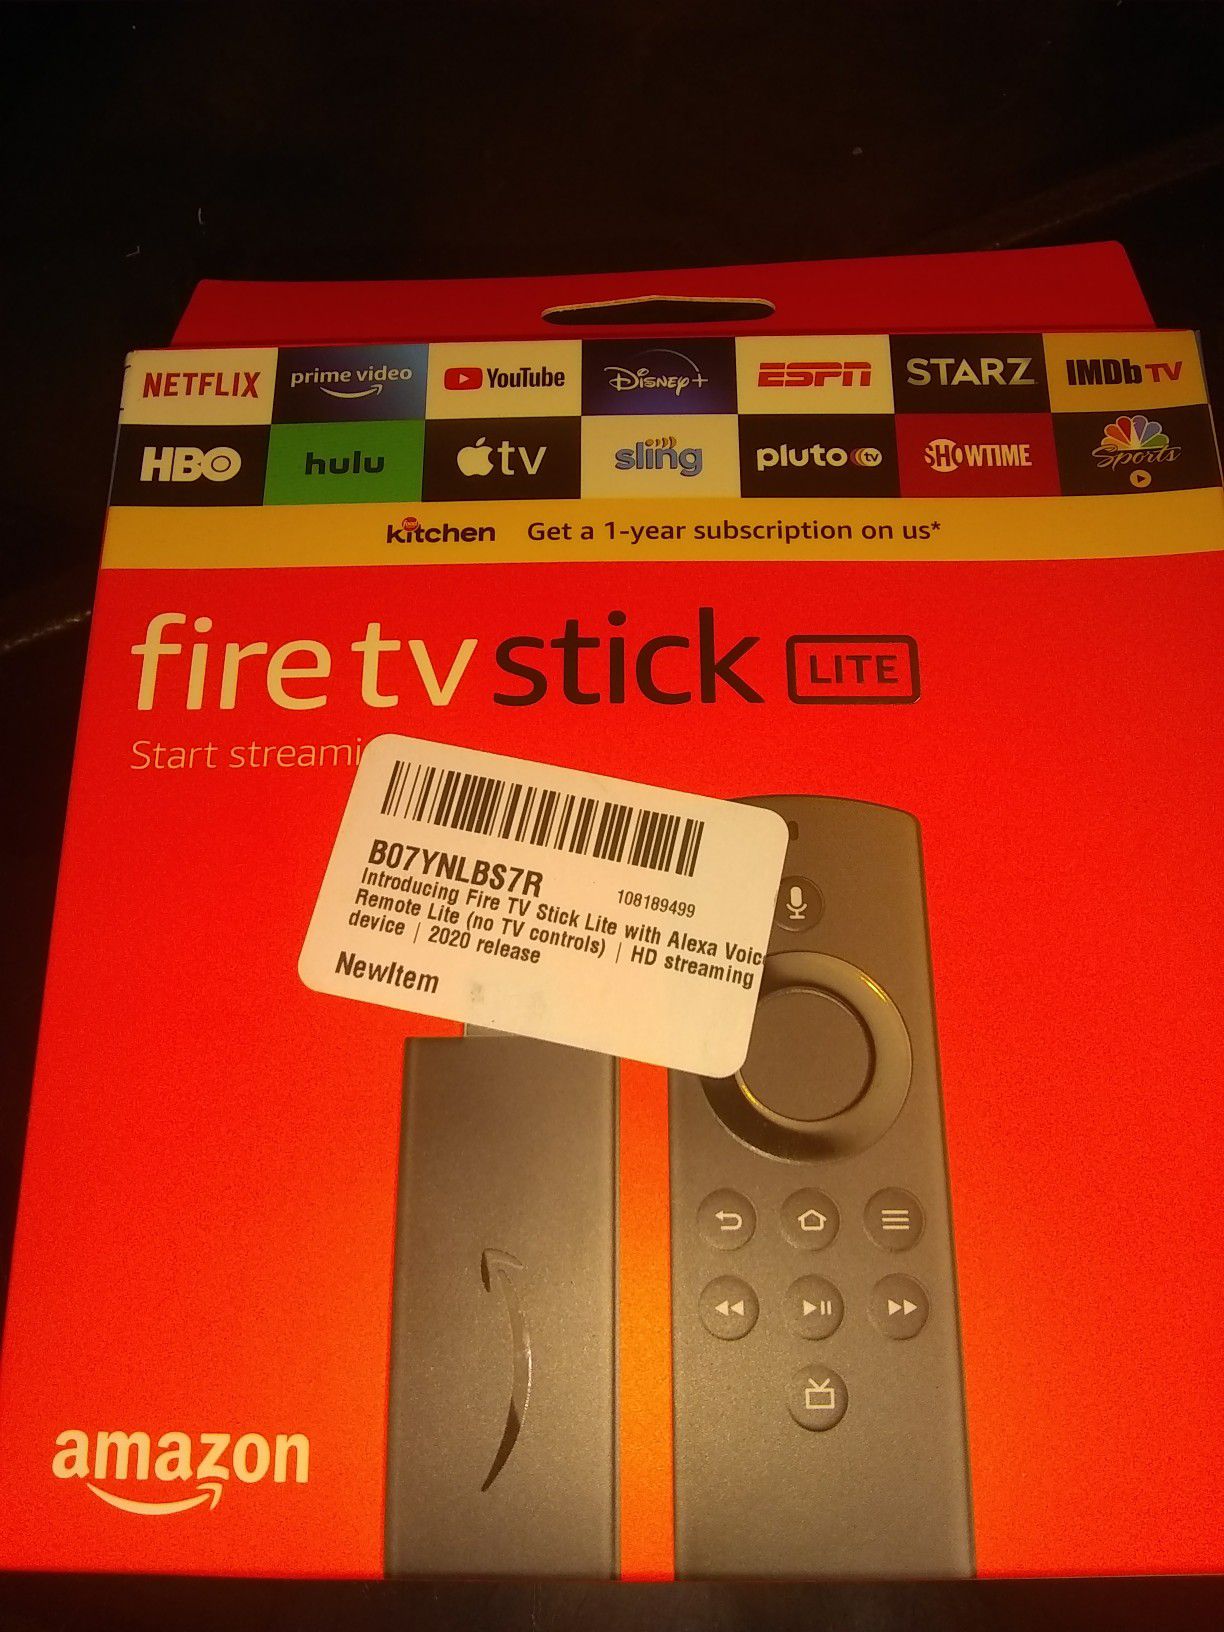 Fire tv stick (Lite)